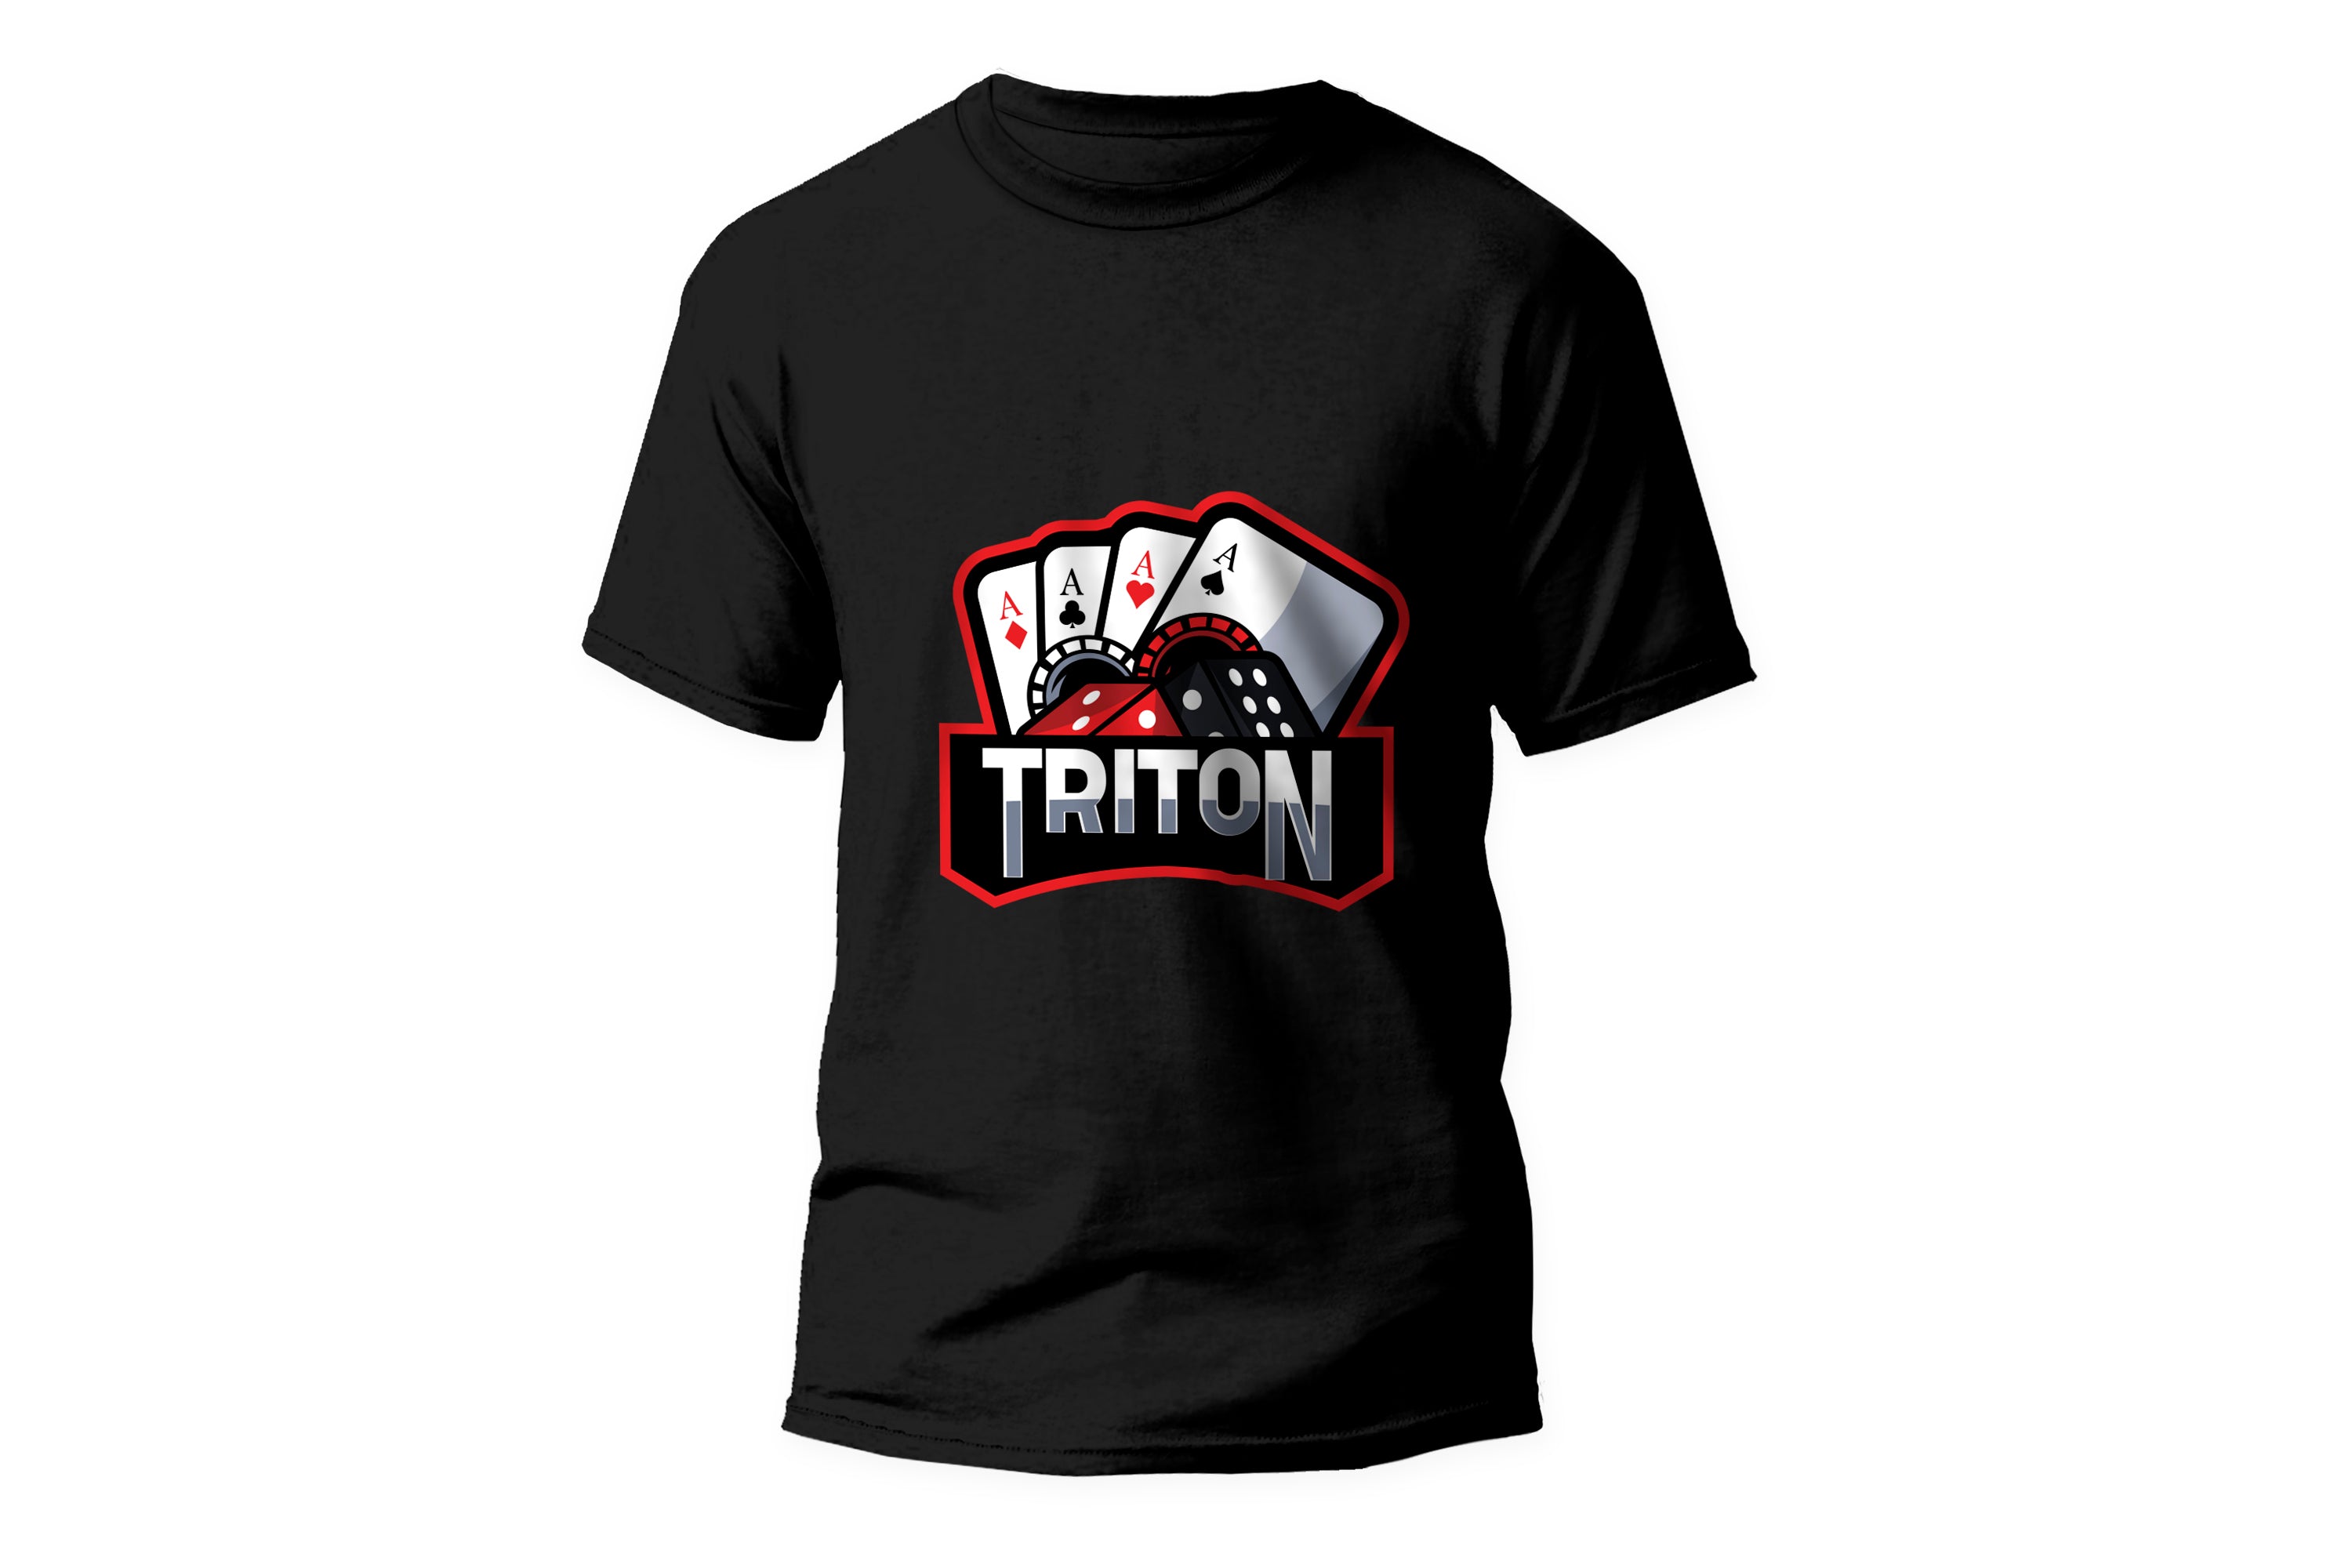 Triton Unisex T-Shirt for Men and Women